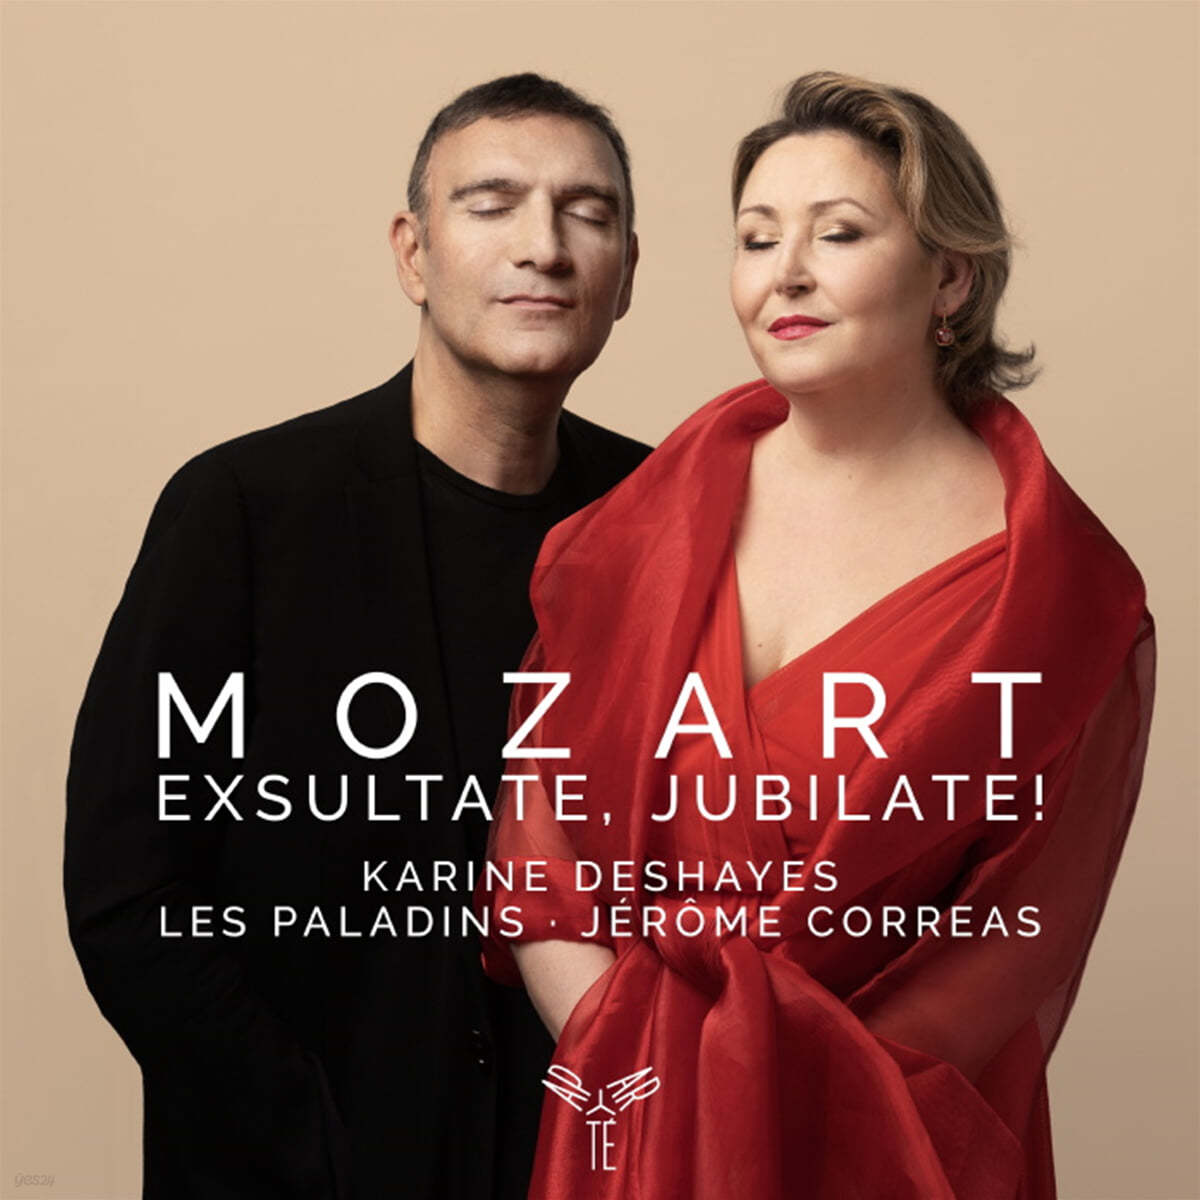 Karine Deshayes / Jerome Correas 모차르트: 기뻐하라, 환호하라! (Mozart: Exsultate, Jubilate!)